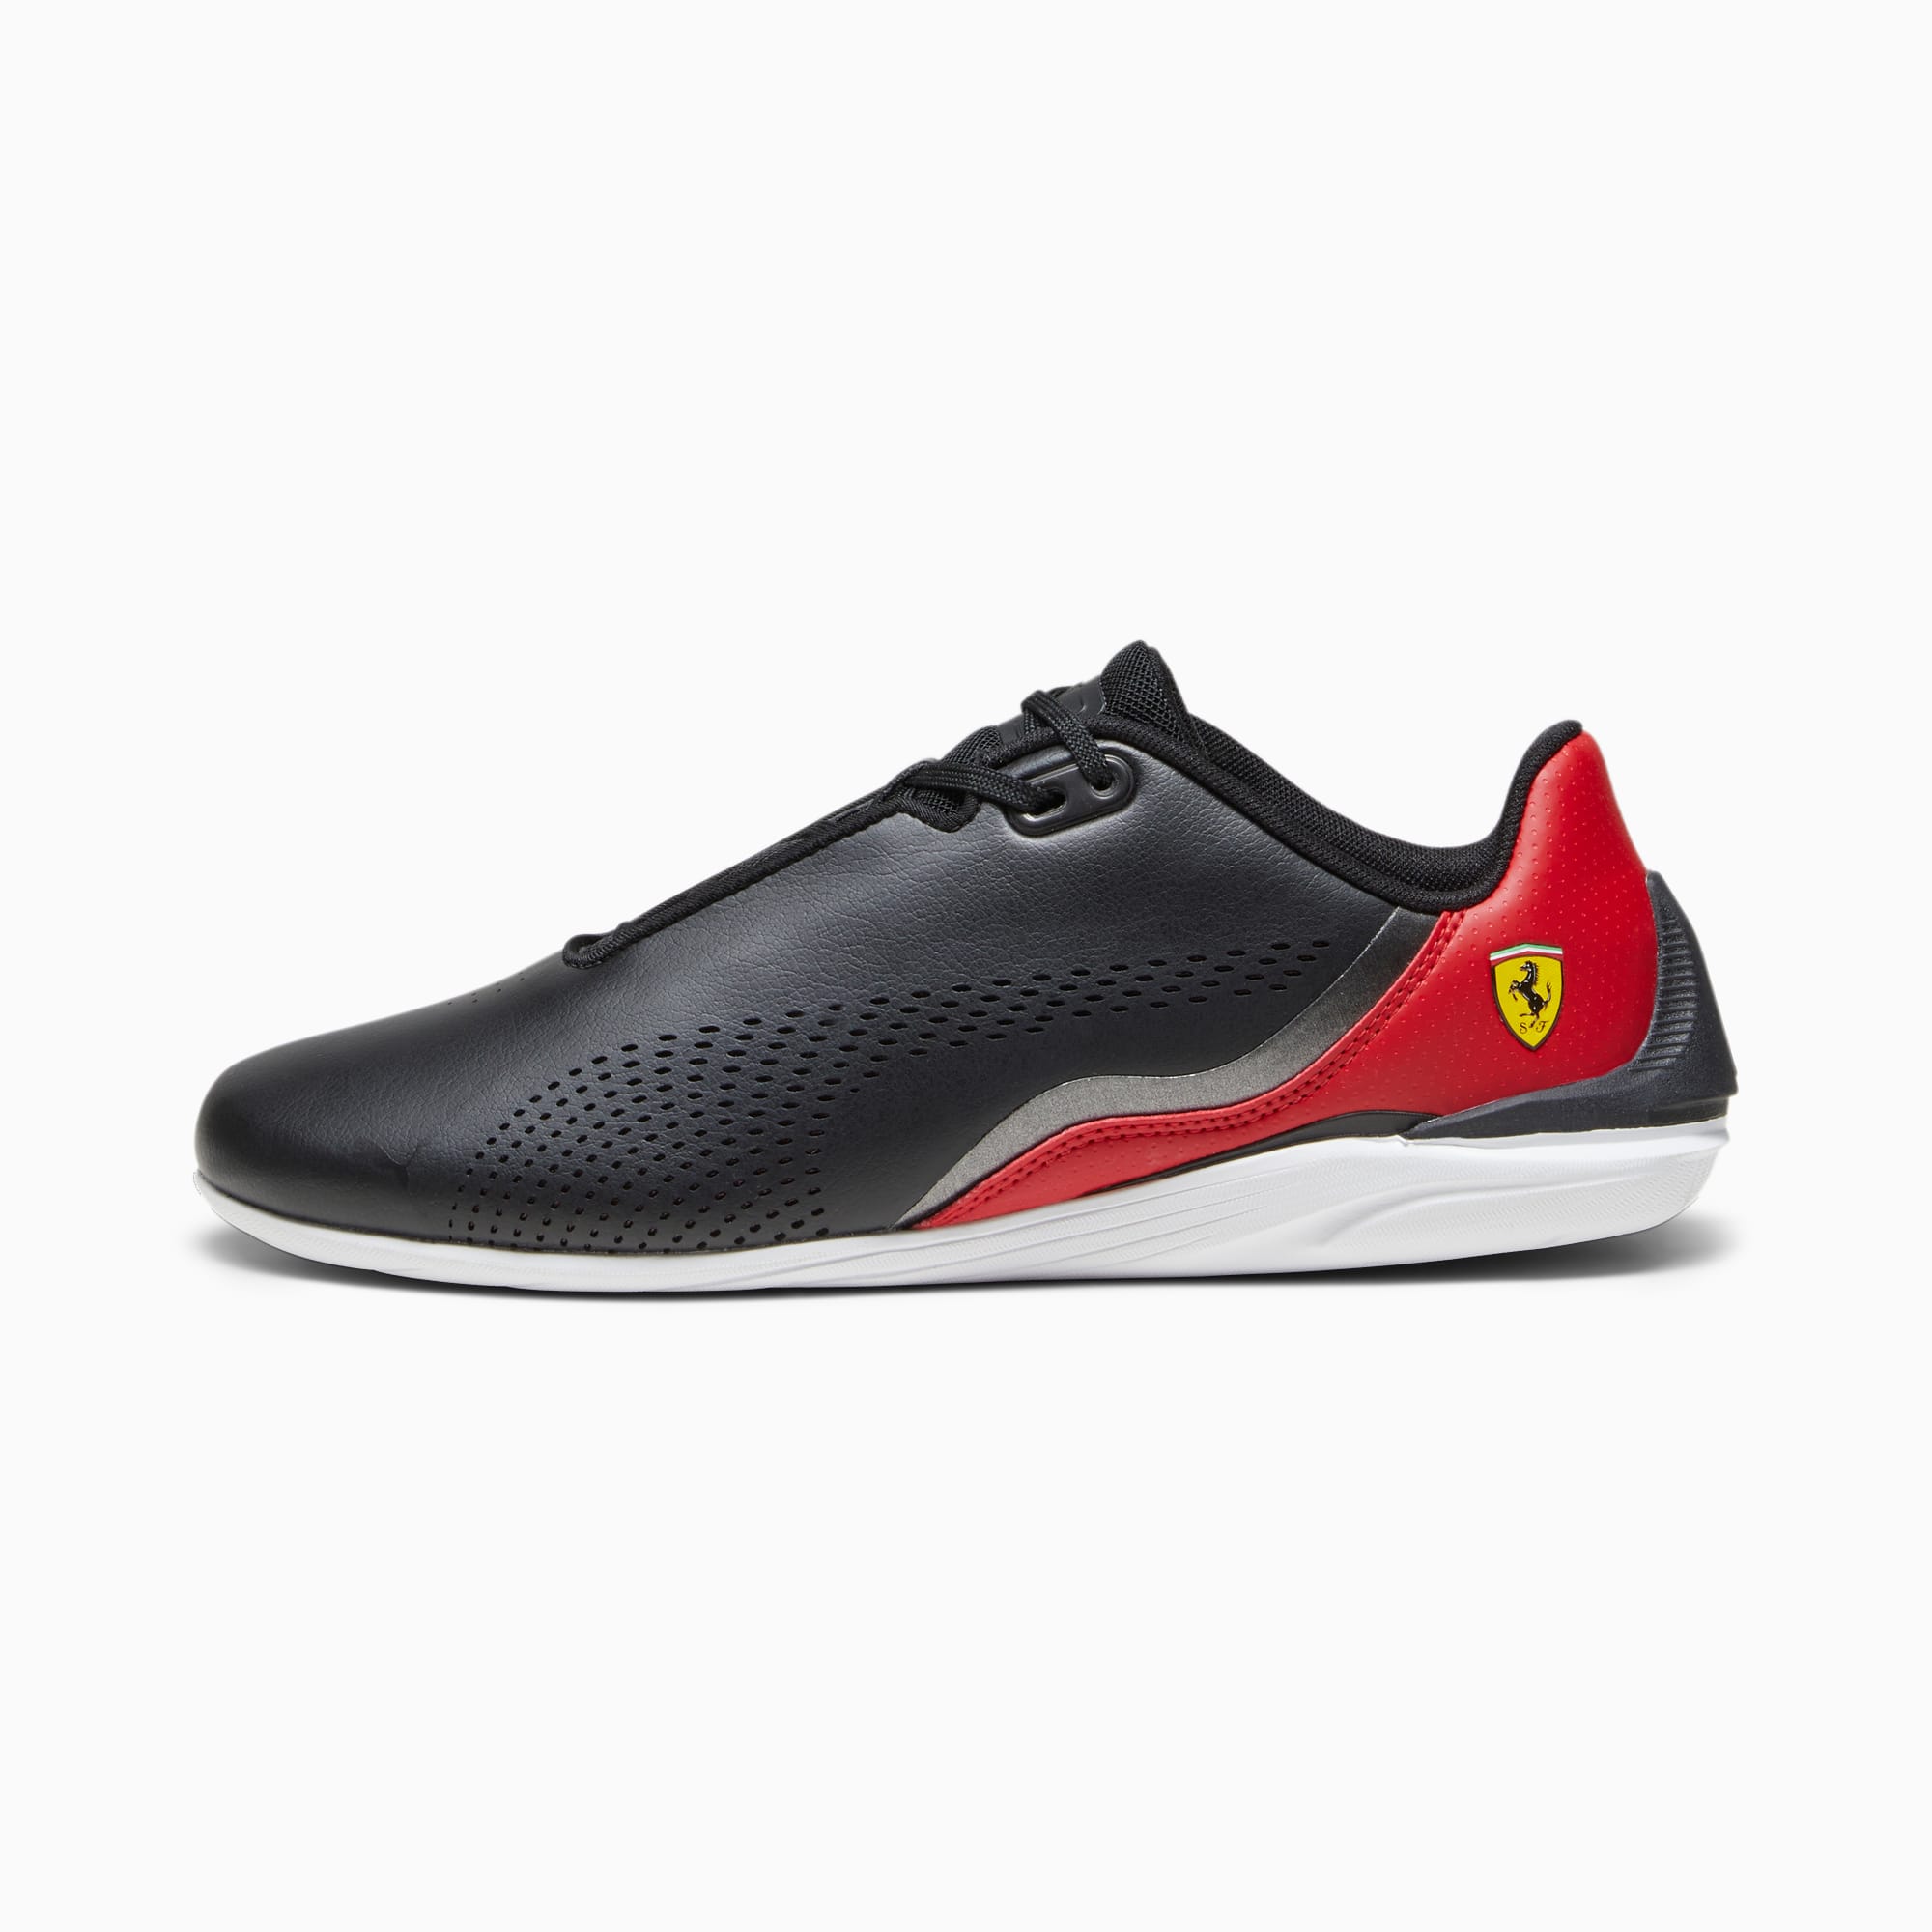 PUMA Chaussures De Sports Automobiles Drift Cat Decima Scuderia Ferrari, Noir/Rouge/Blanc